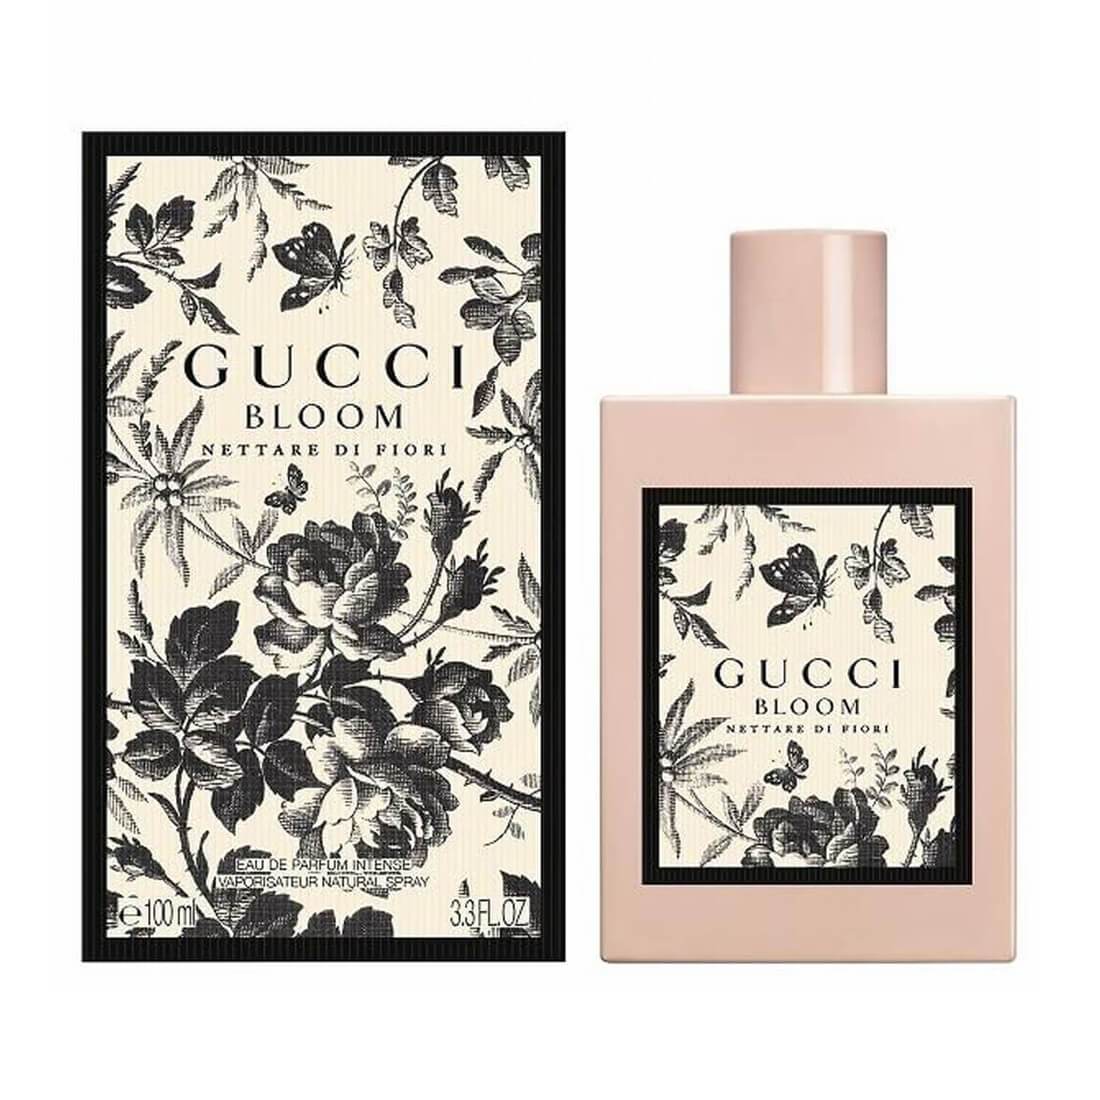 Gucci Bloom Nettare Di Fiori Eau De Parfum Intense For Women